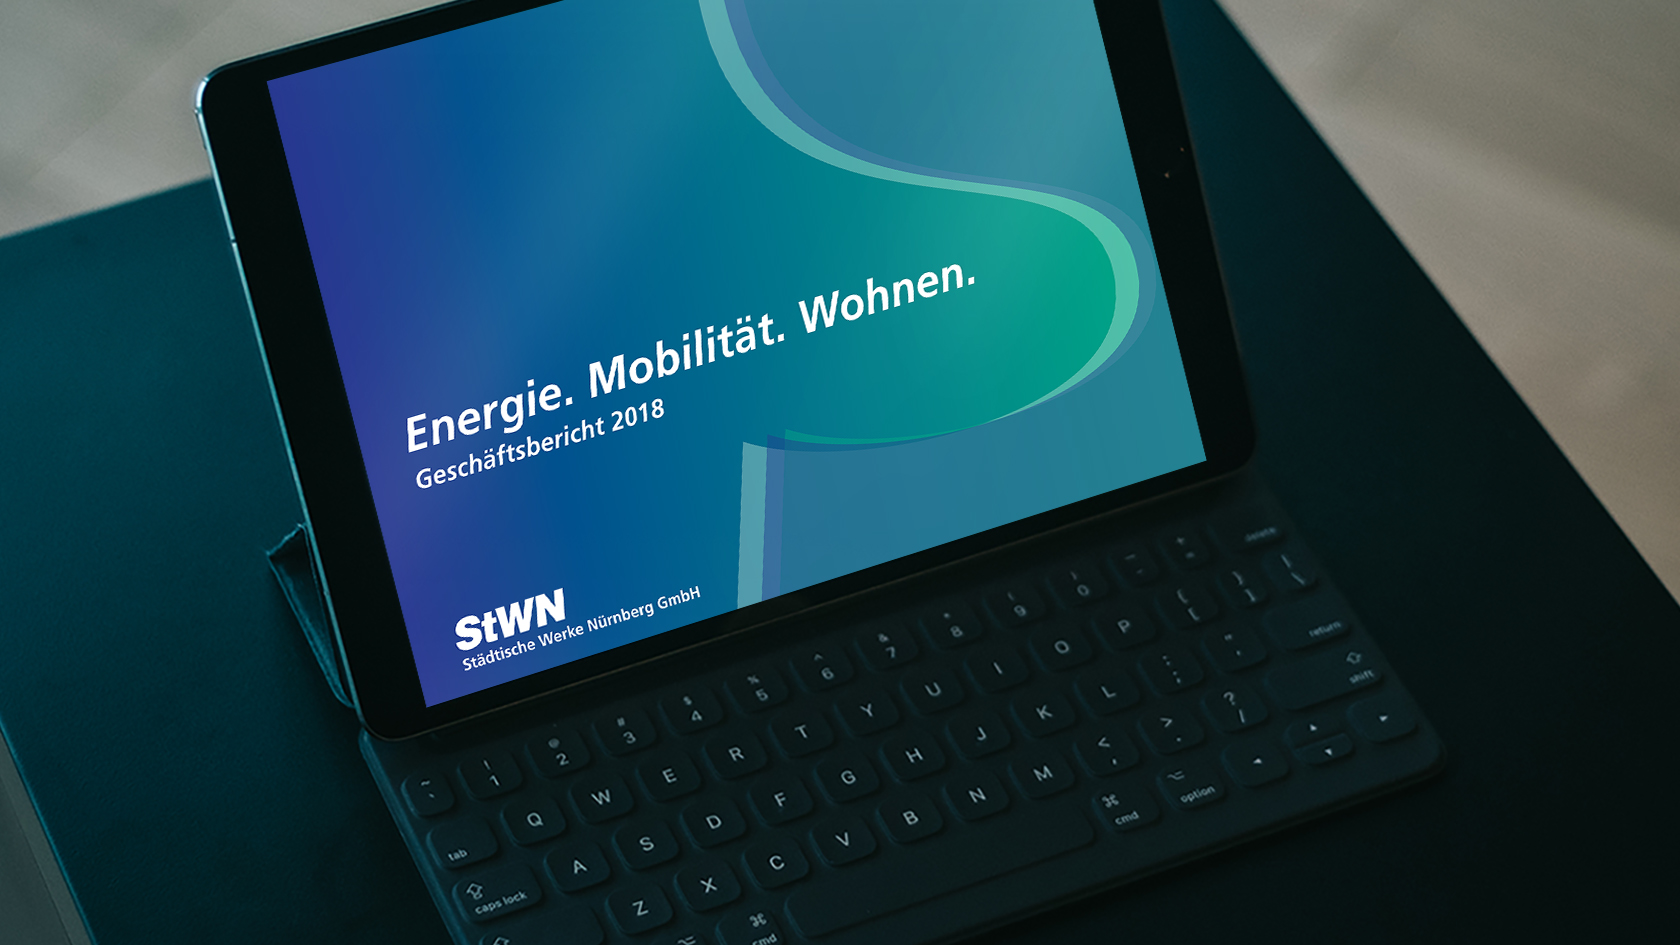 Digital annual report for Städtische Werke Nürnberg GmbH on Tab